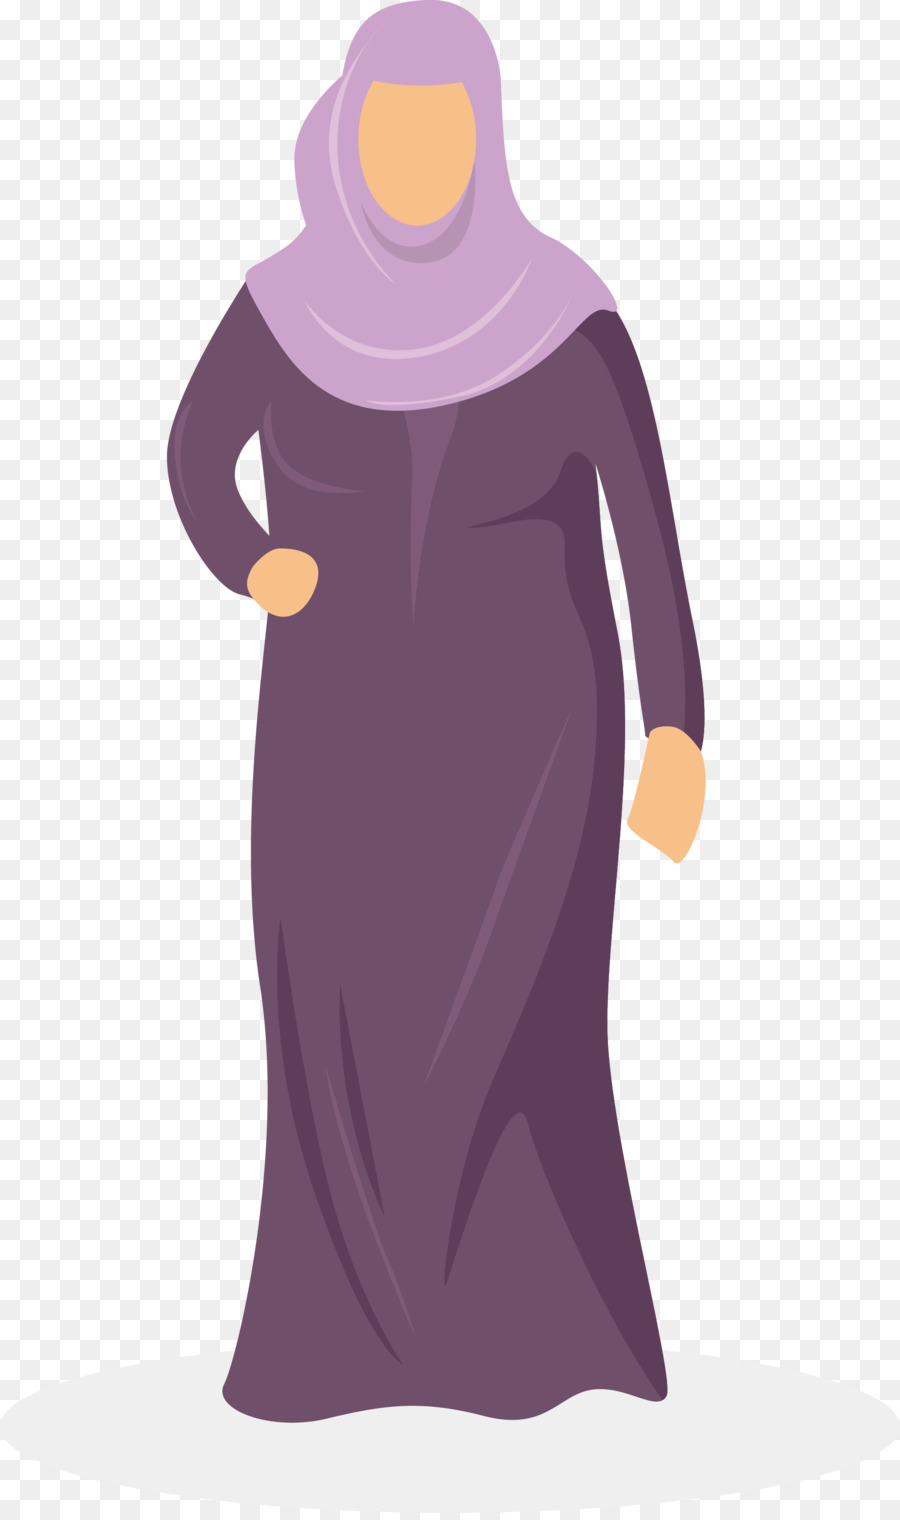 Arabian Peninsula Woman - Mysterious Arabia women png download - 1889*3176 - Free Transparent Arabian Peninsula png Download.